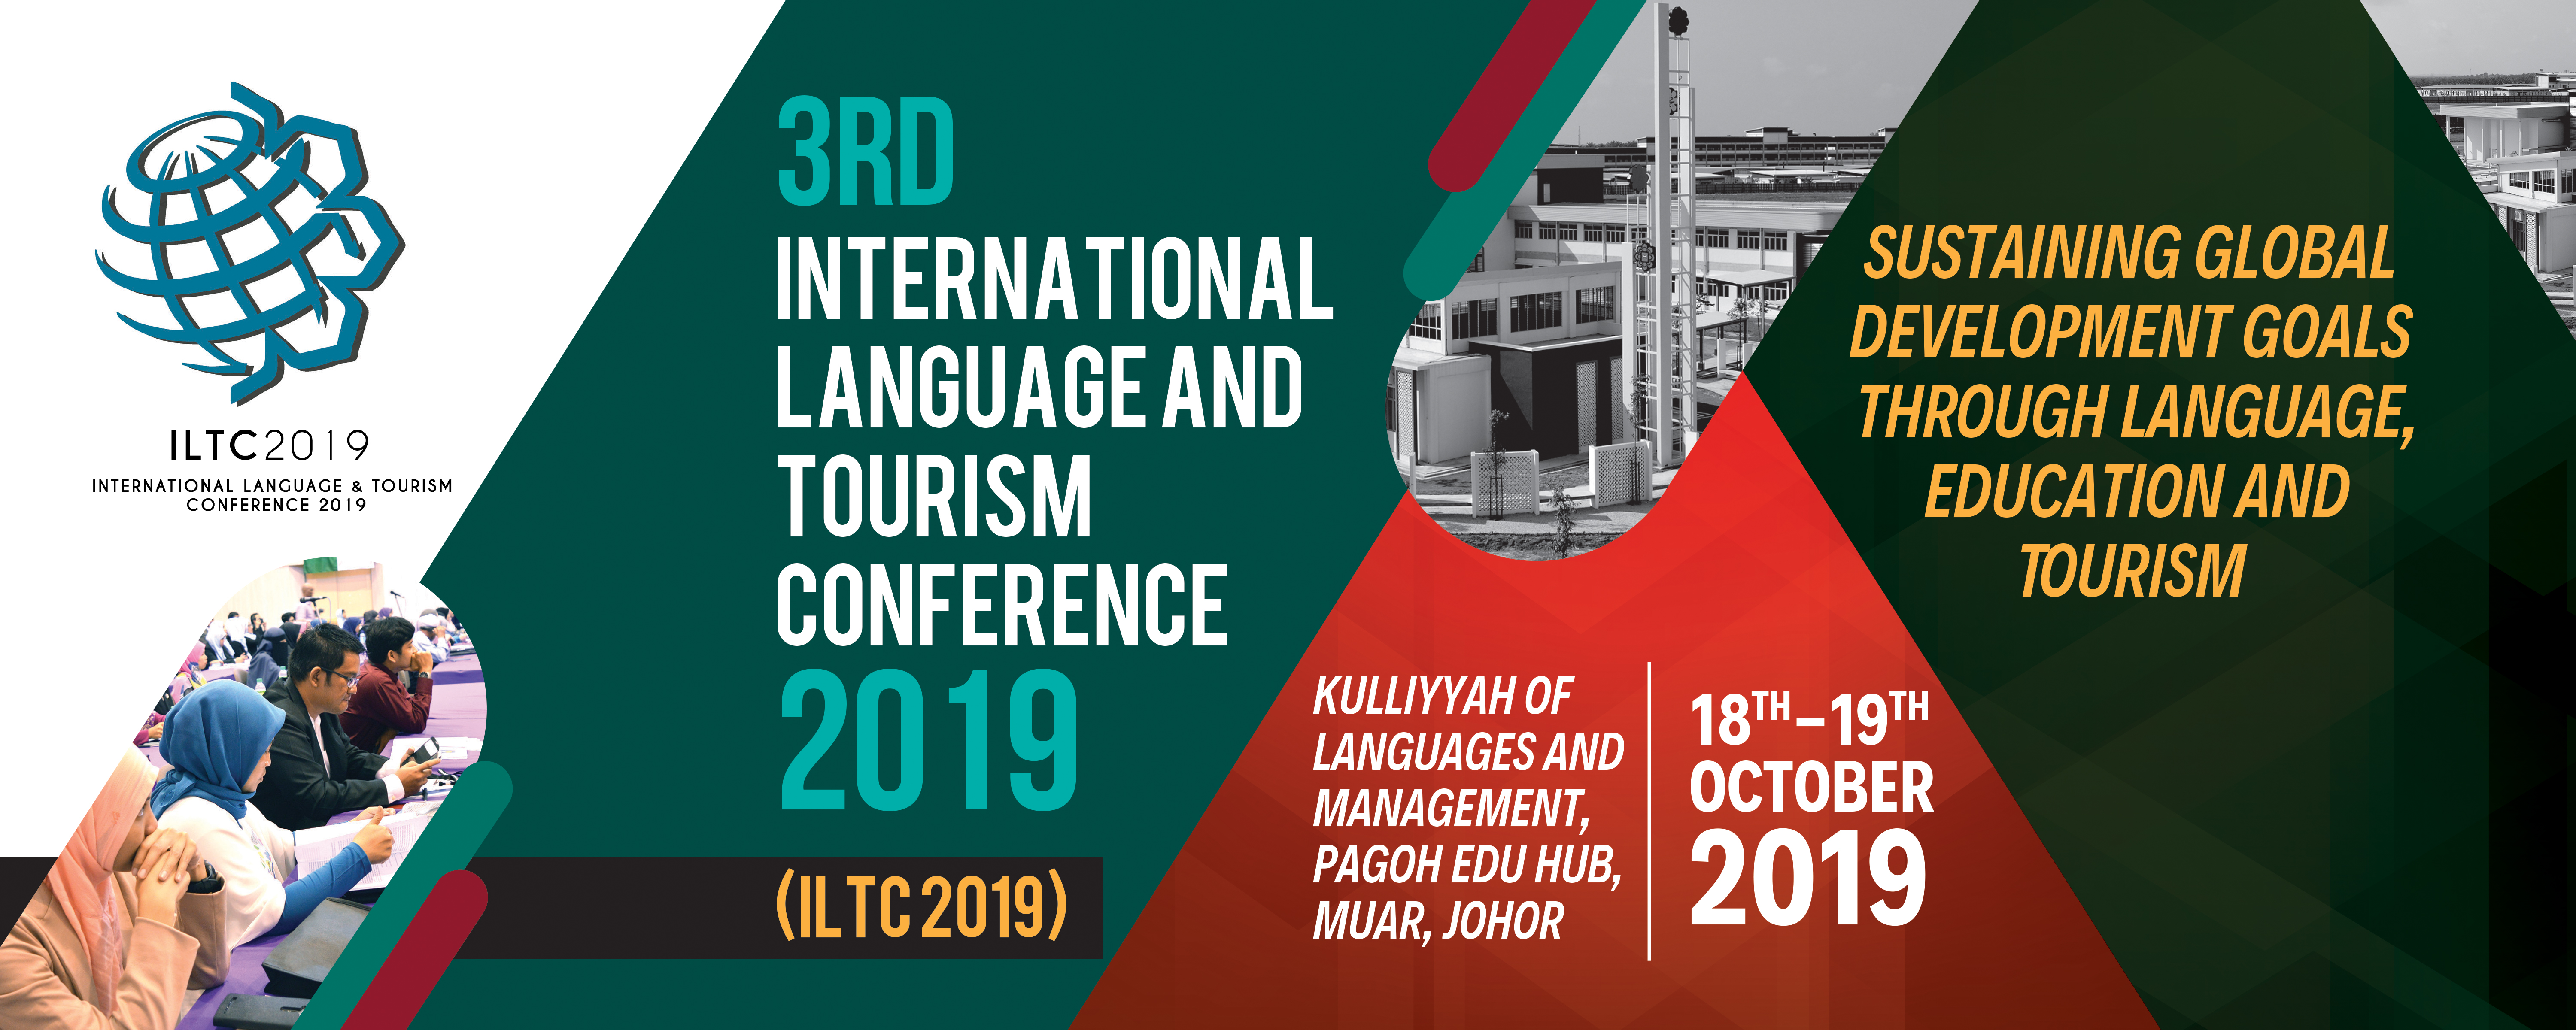 International Language and Tourism Conference 2019 (ILTC 2019)